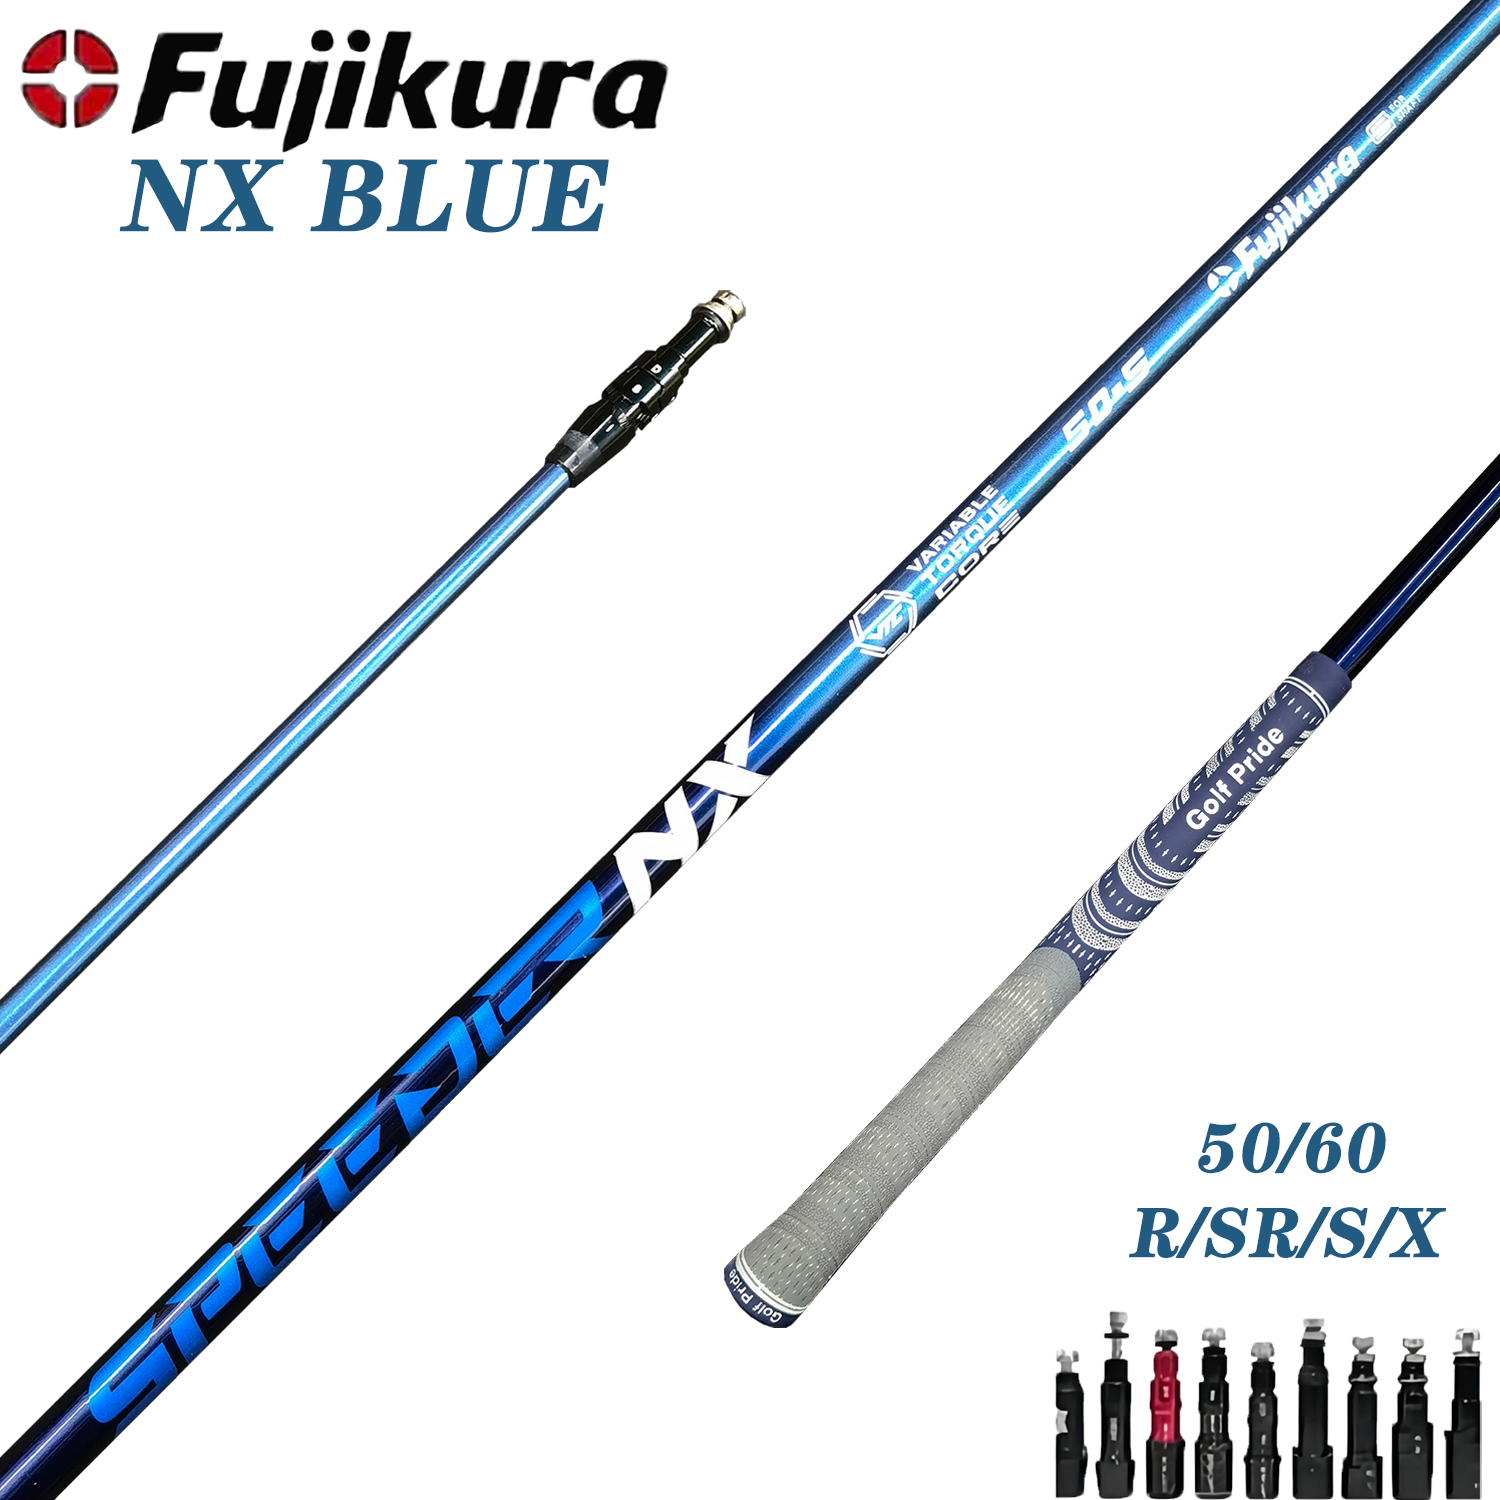 Customizable Golf Shaft - Fujikura SPEEDER NX 50/60 Blue , Club Shafts - 0.335 Tip - S, R, X Flex Options - Free Assembly Sleeve & Grip